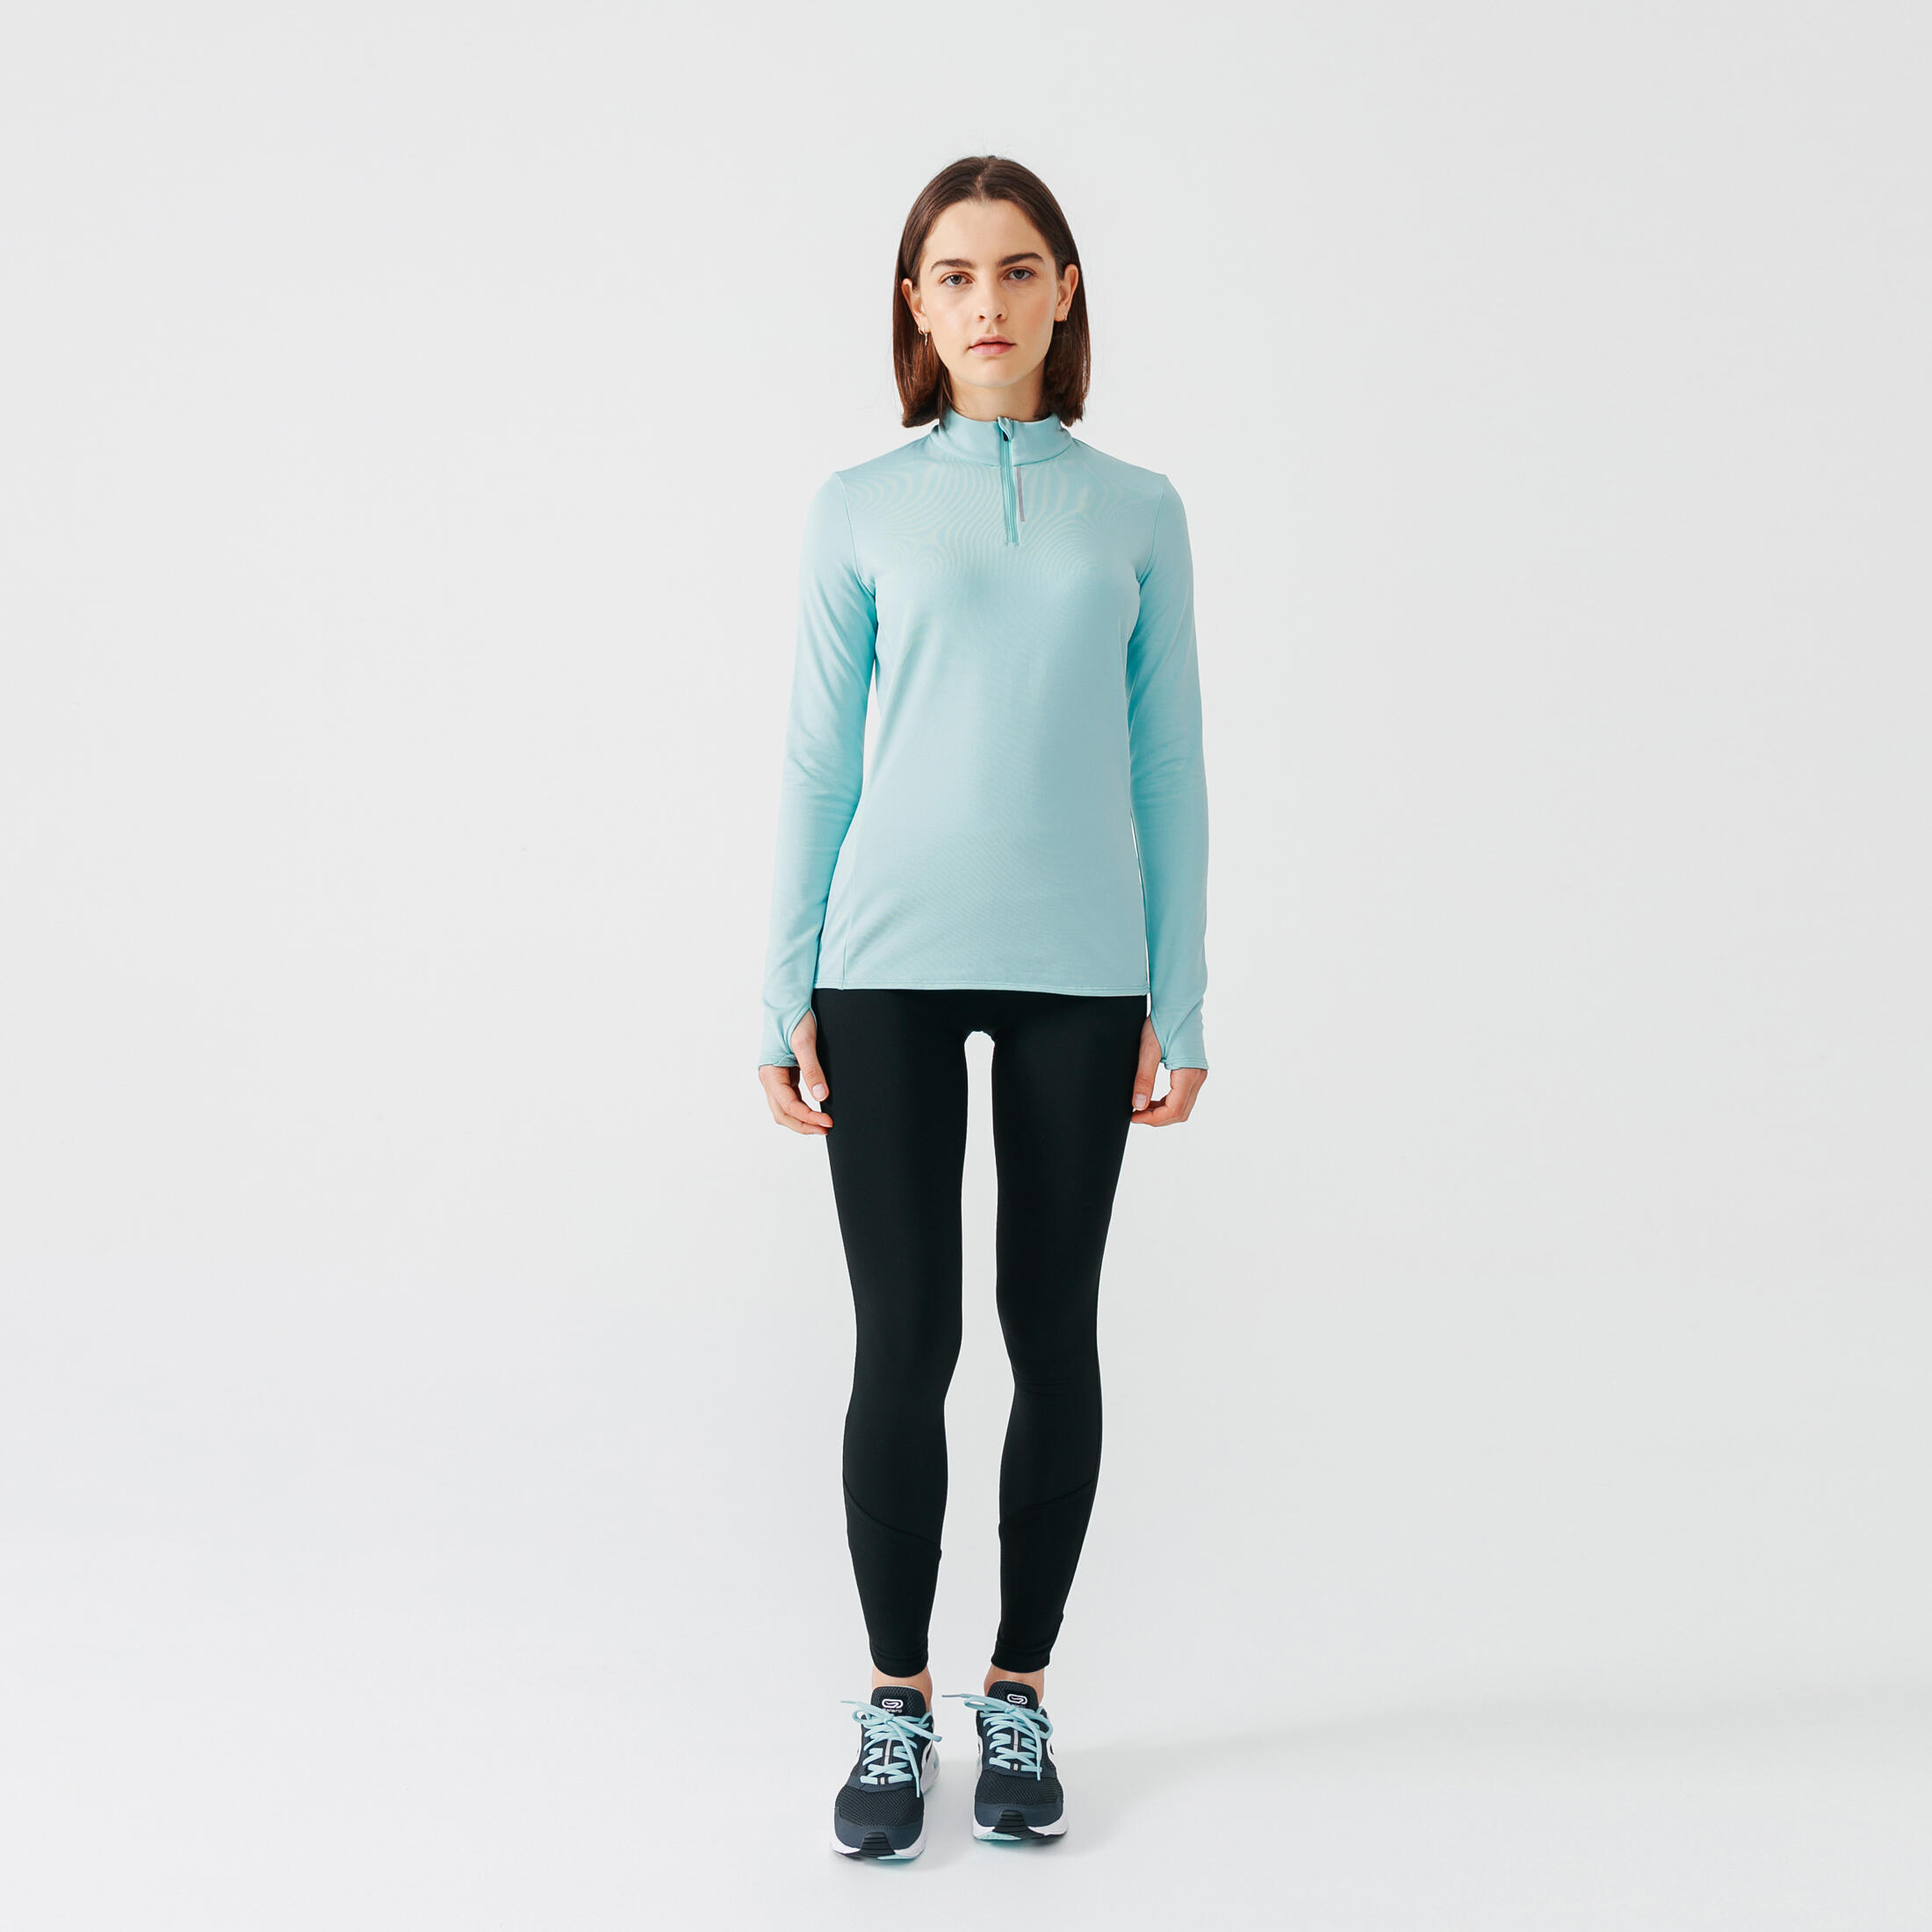 Buy Run Dry Women's Long-Sleeved Half-Zip Running T-shirt - Light 